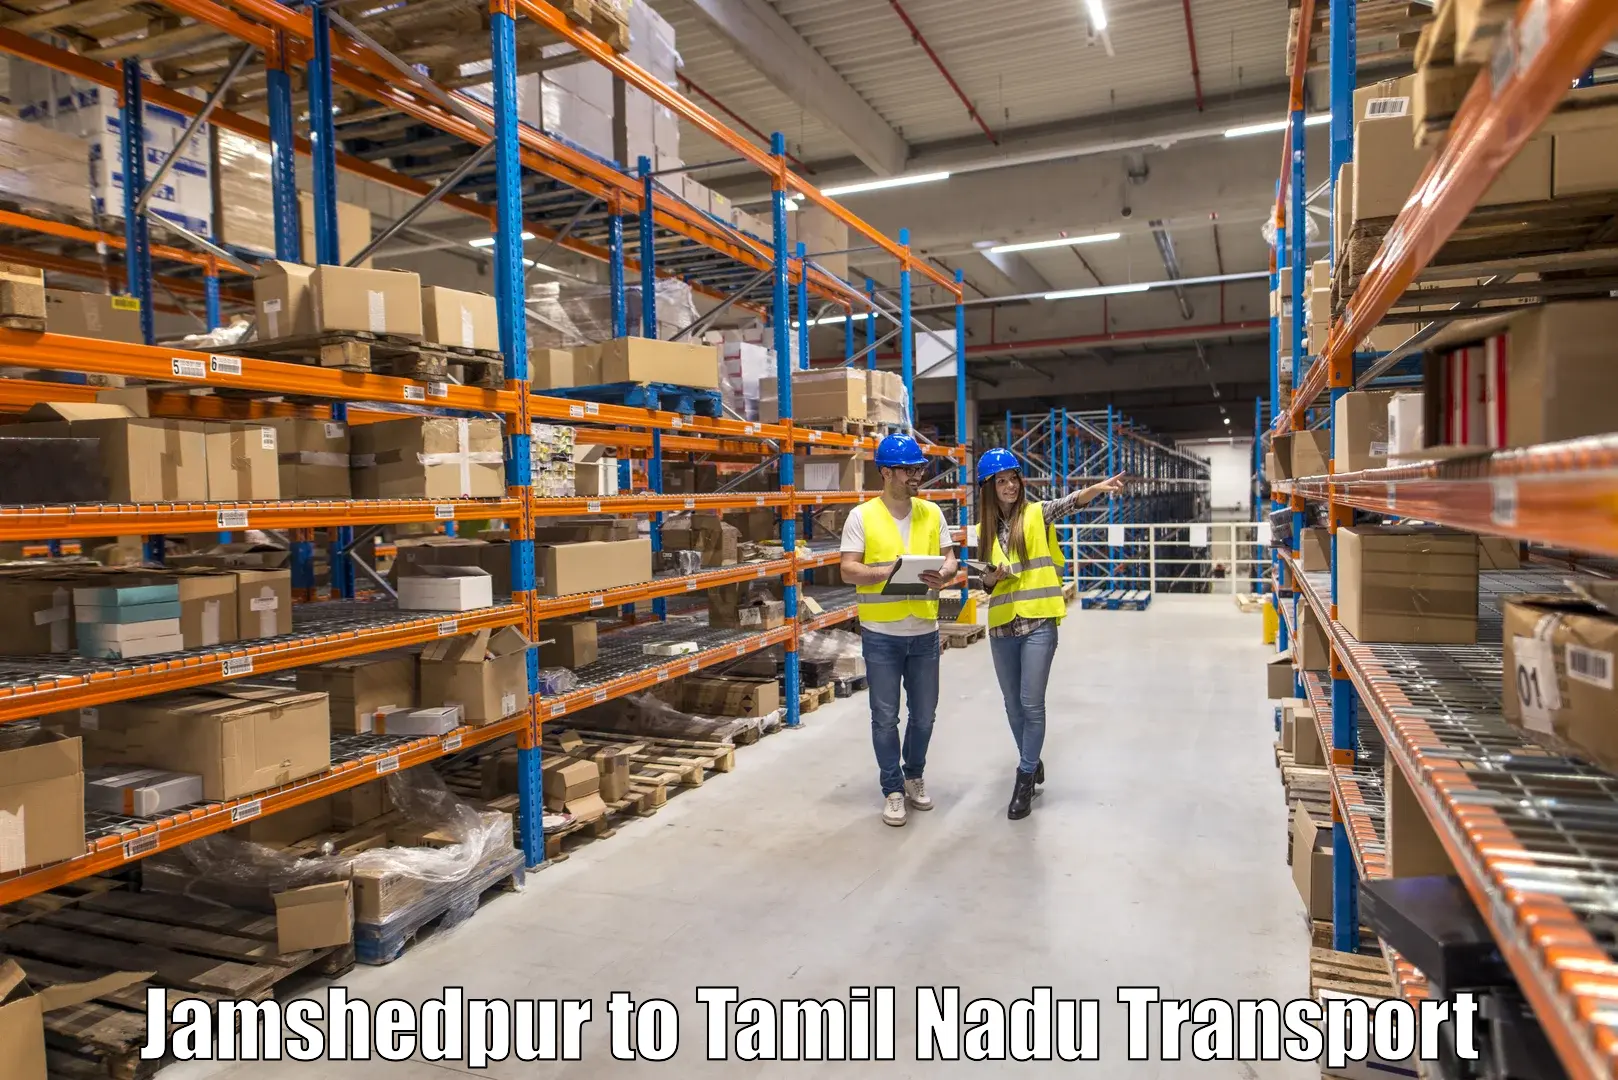 Transport in sharing in Jamshedpur to Orathanadu